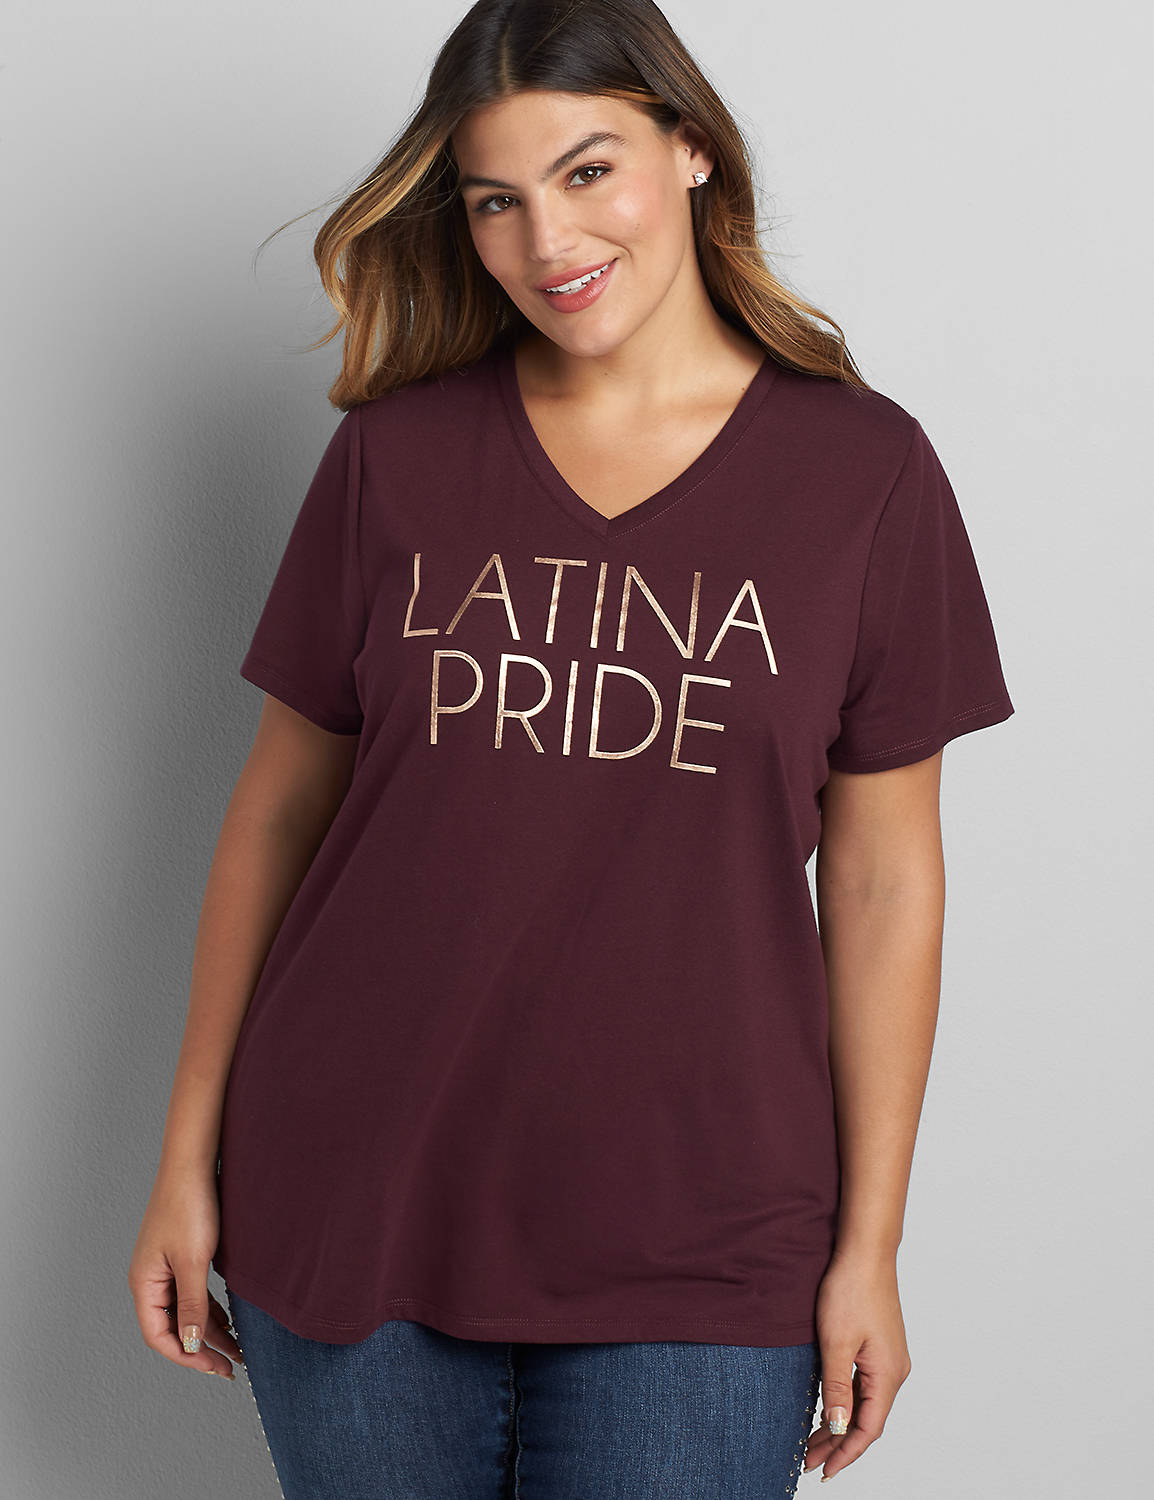 Latina Pride Graphic Tee Product Image 1